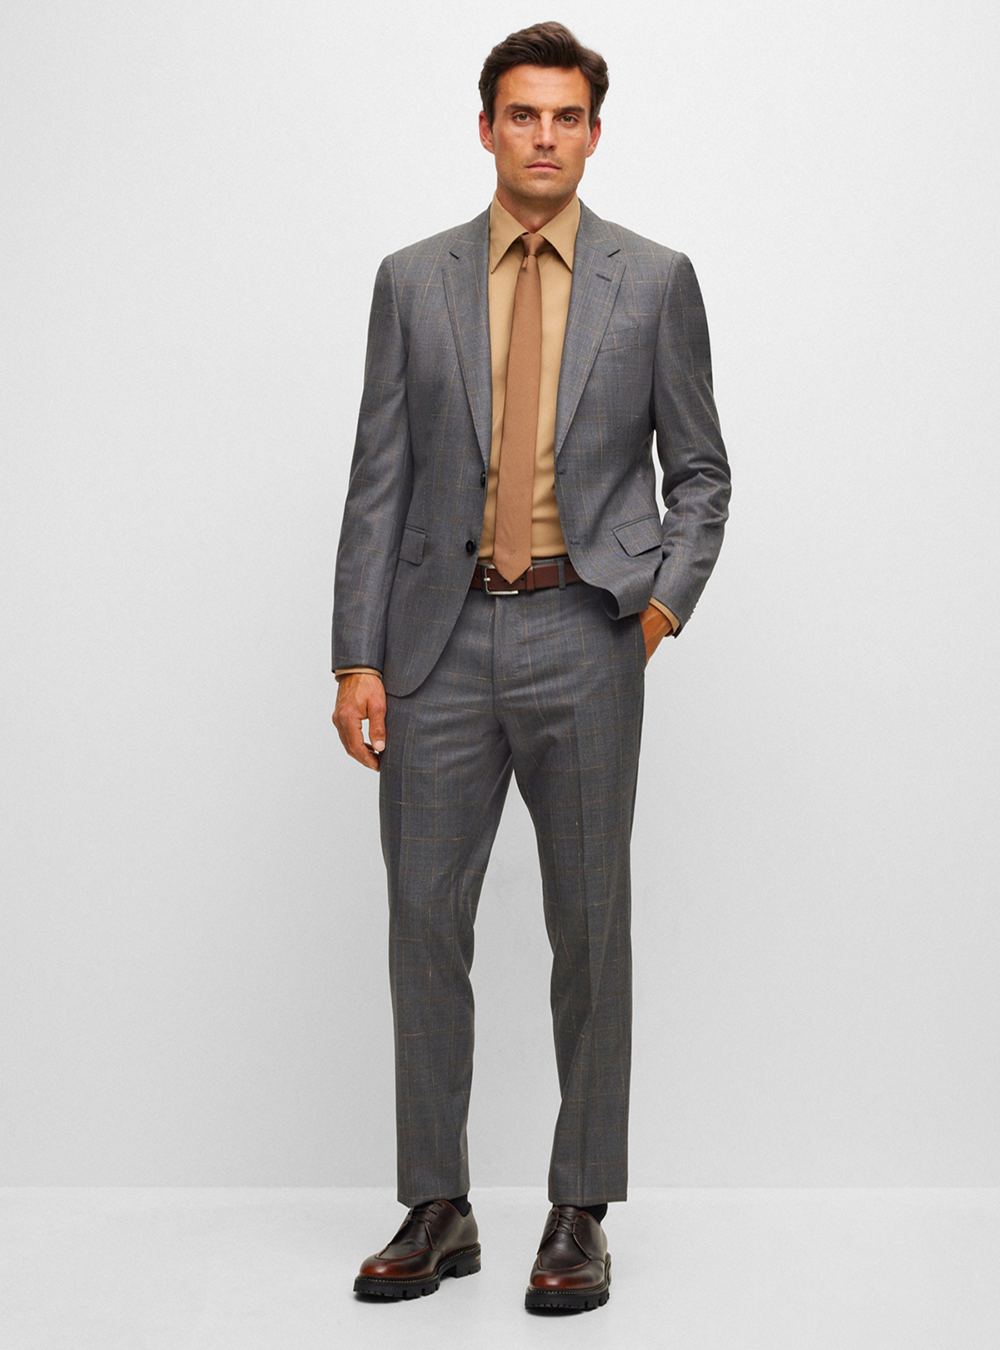 Grey suit, brown dress shirt, brown tie and dark brown derby shoes